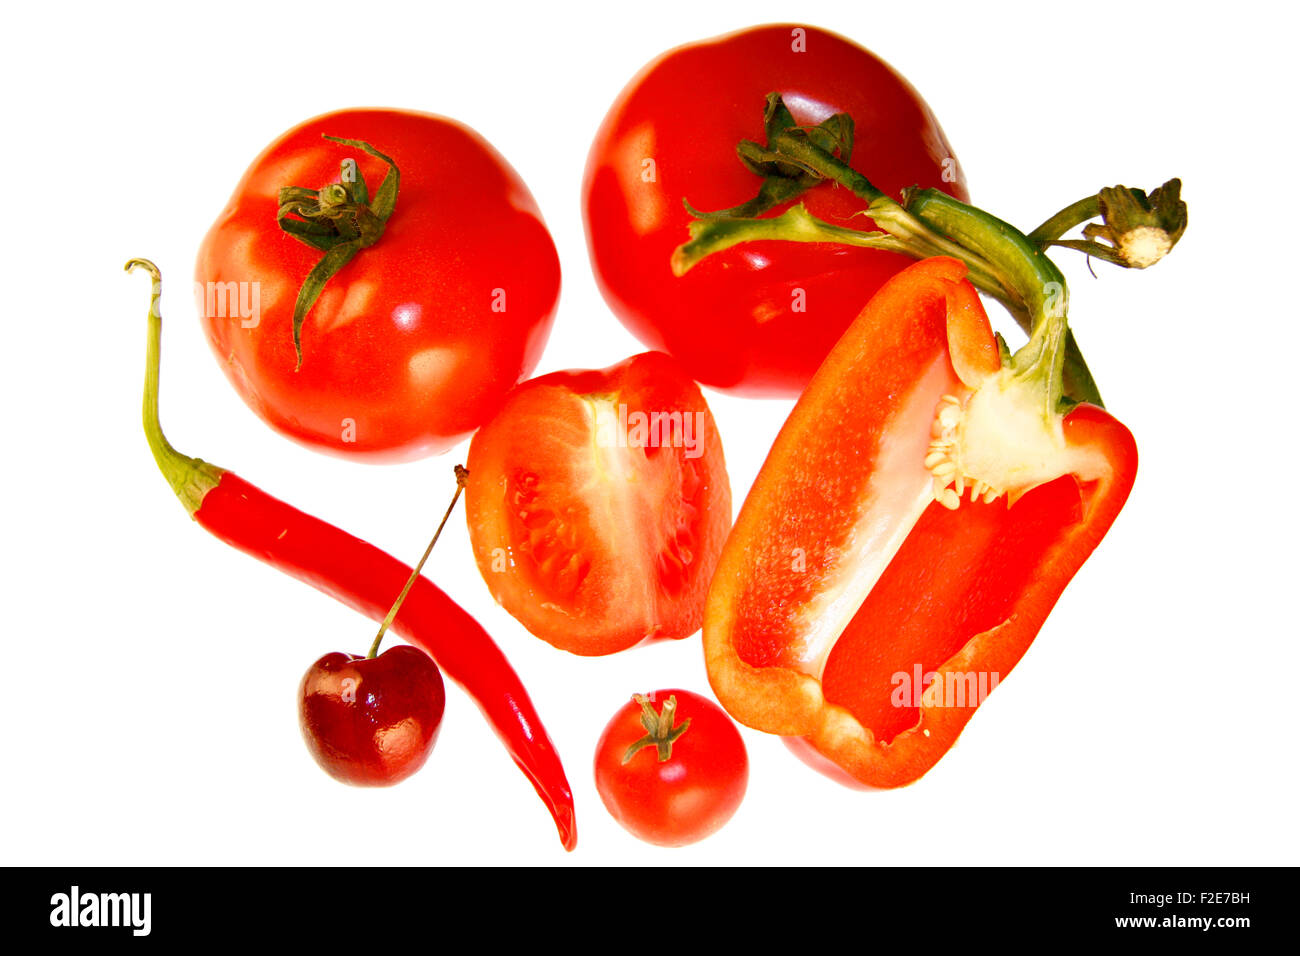 Ueberzeugt, kühl-Schote, Tomaten, Paprika-Schote - Symbolbild Nahrungsmittel. Stockfoto